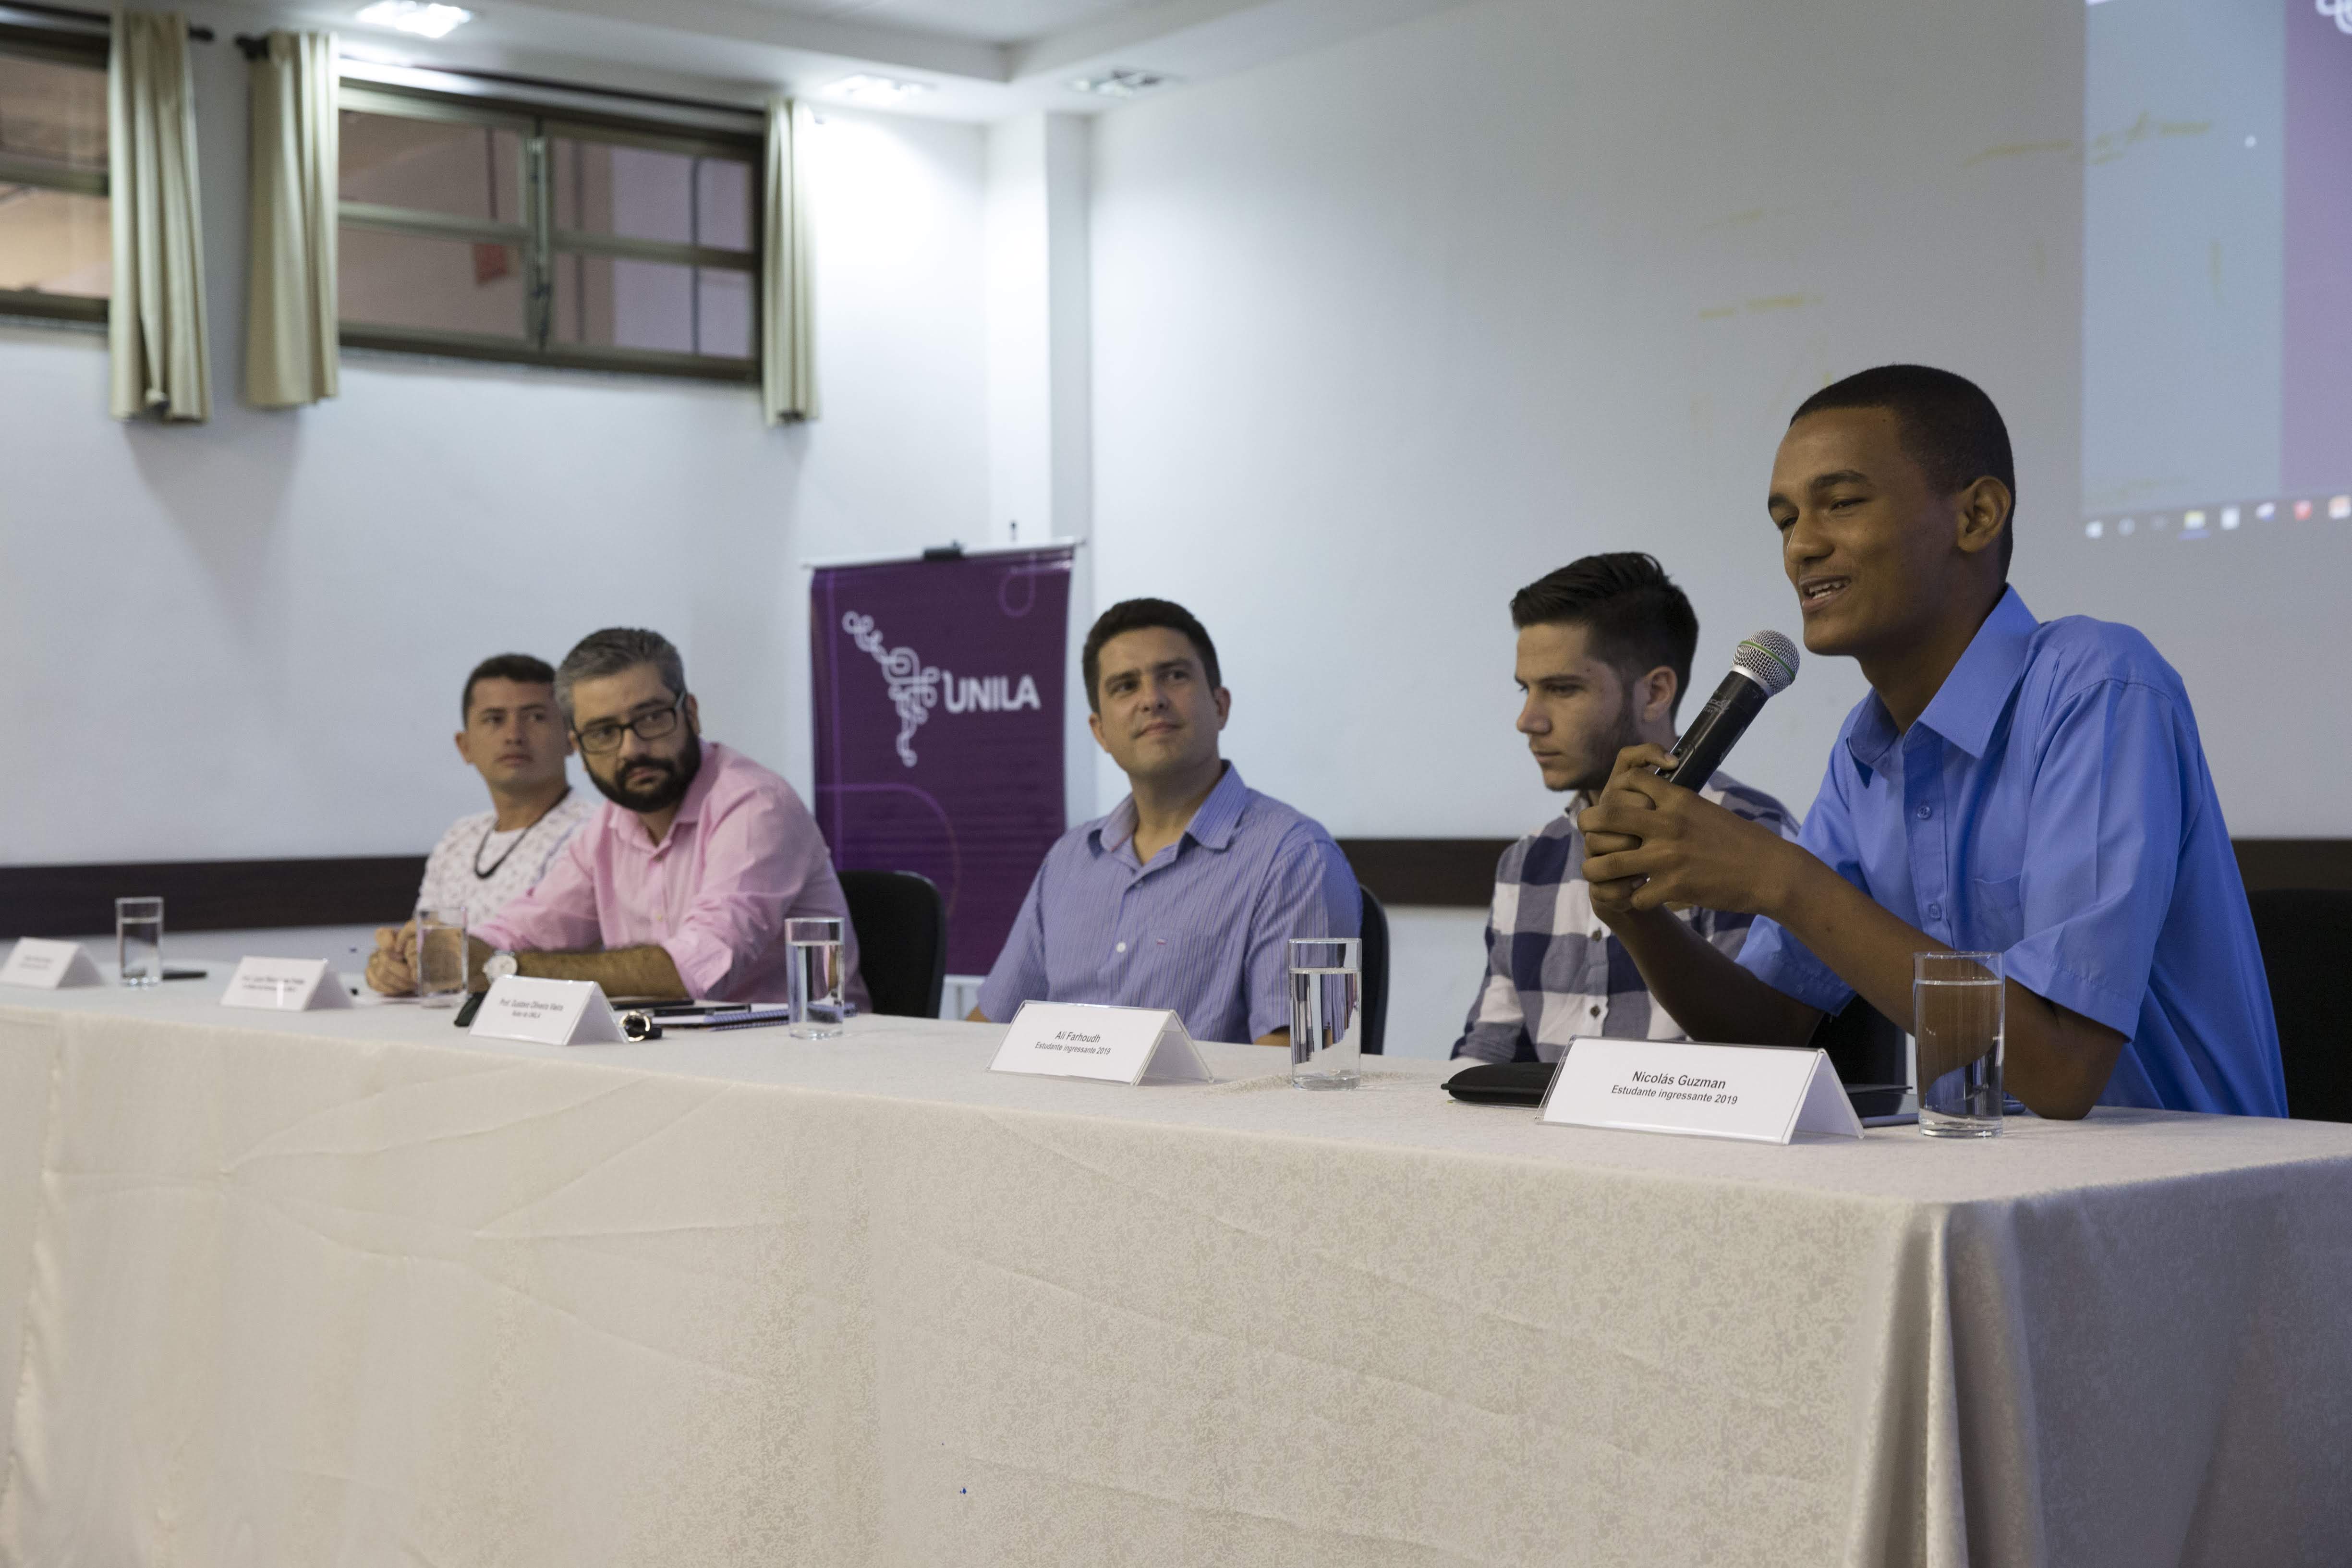 Mesa com os participantes da abertura: Edimar Nunes, Lucio Freitas, Gustavo Vieira, Ali Farhoudh, Nicolas Guzman